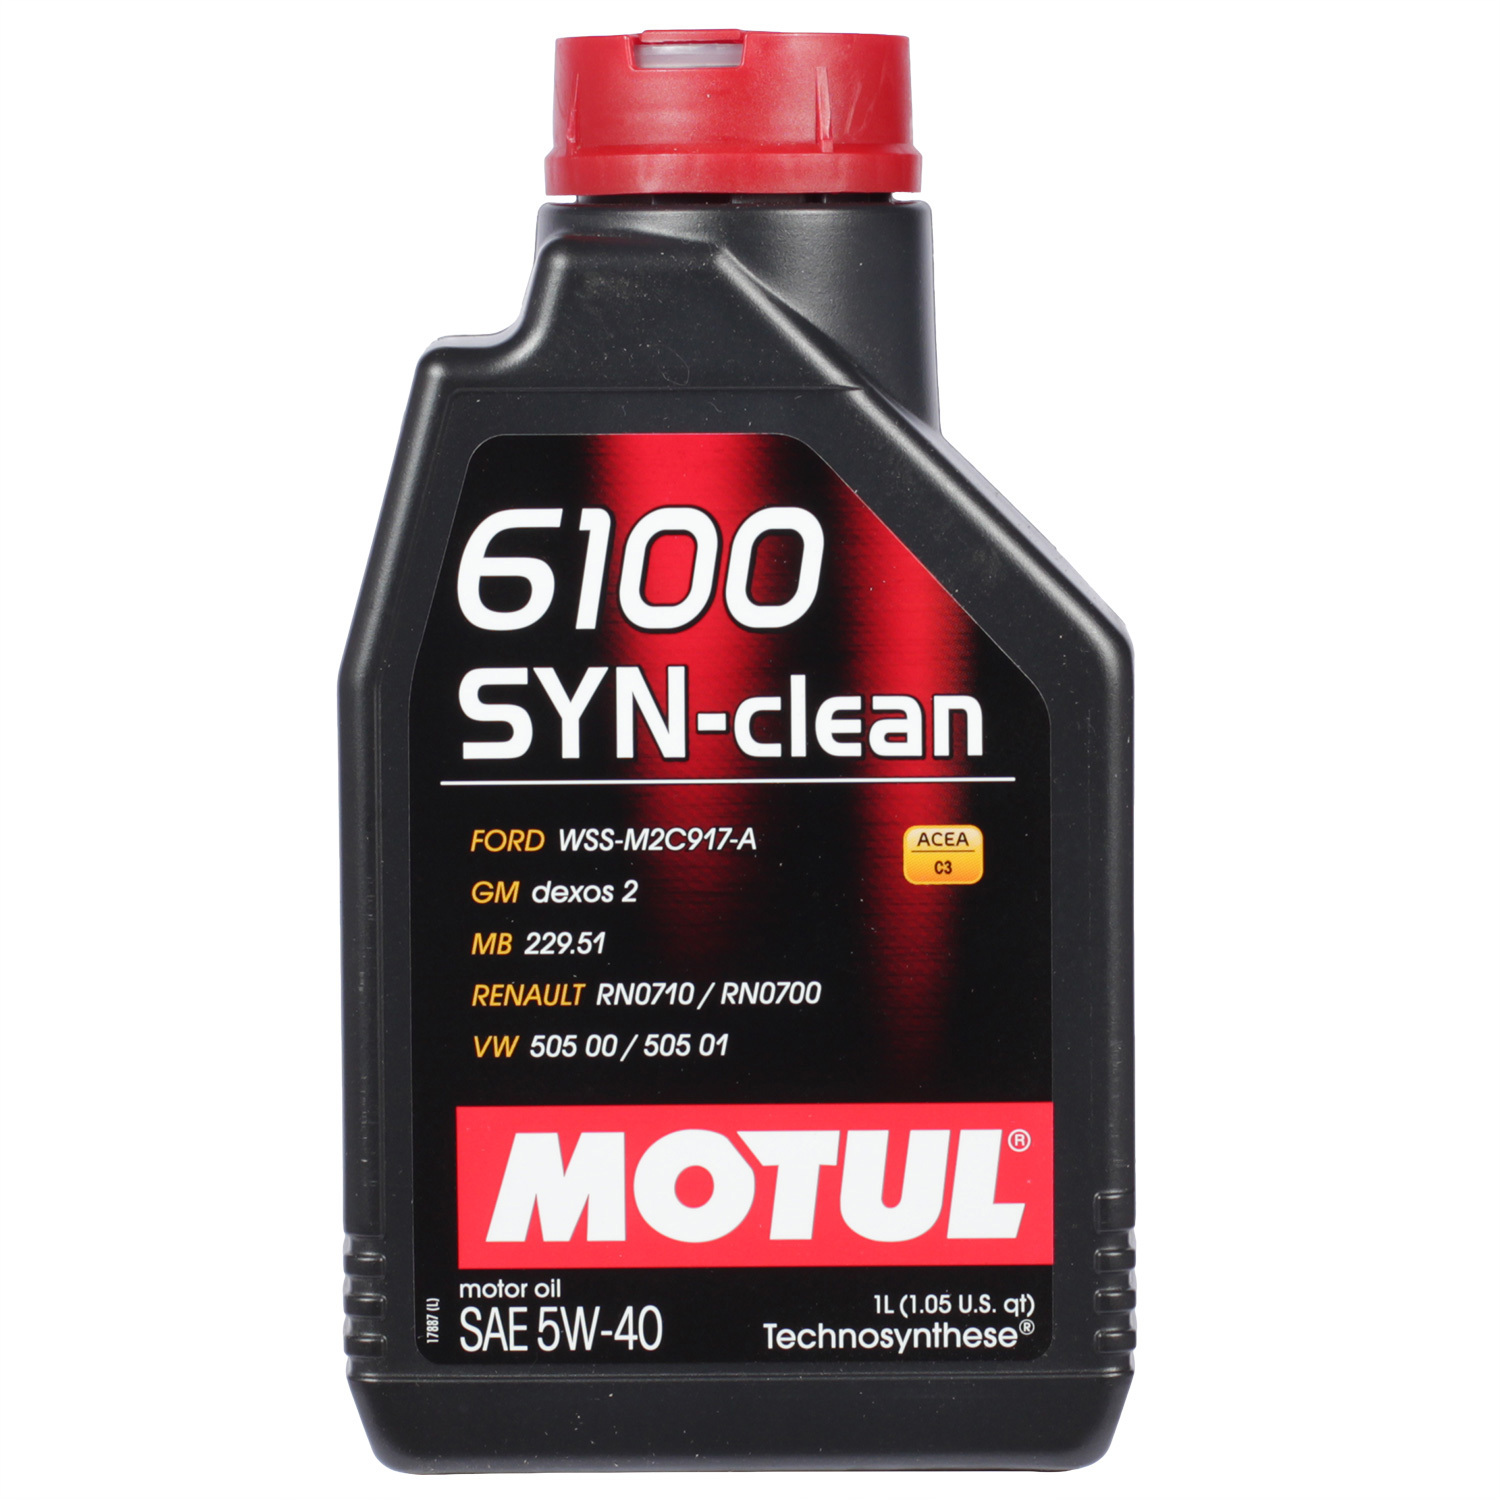 Motul Моторное масло Motul 6100 SYN-CLEAN 5W-40, 1 л масло моторное motul 6100 syn clean 5w 30 синтетическое 1 л